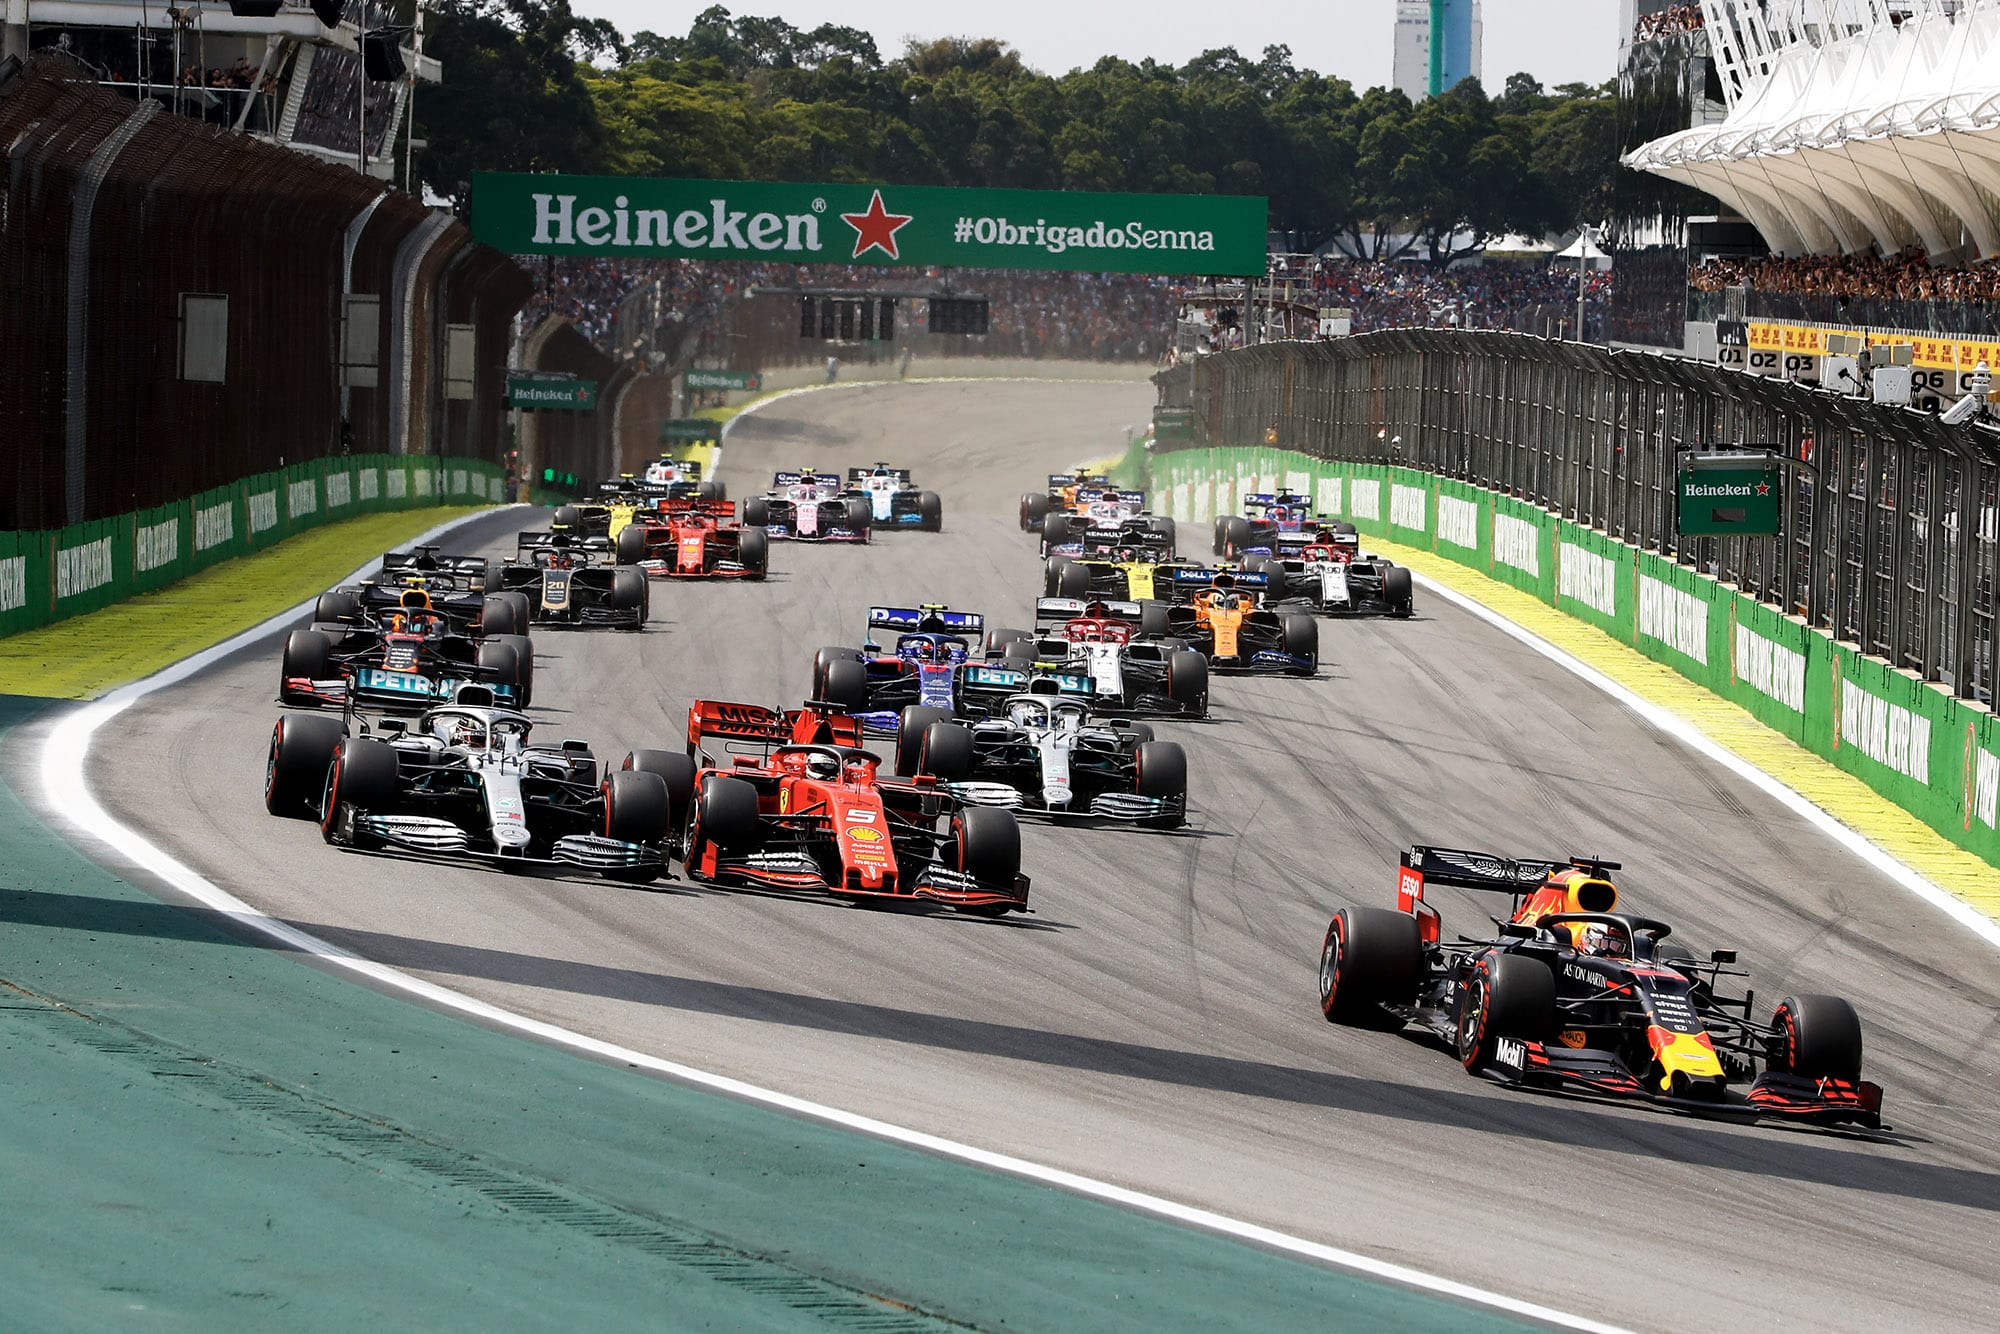 2019 Brazilian Grand Prix race results